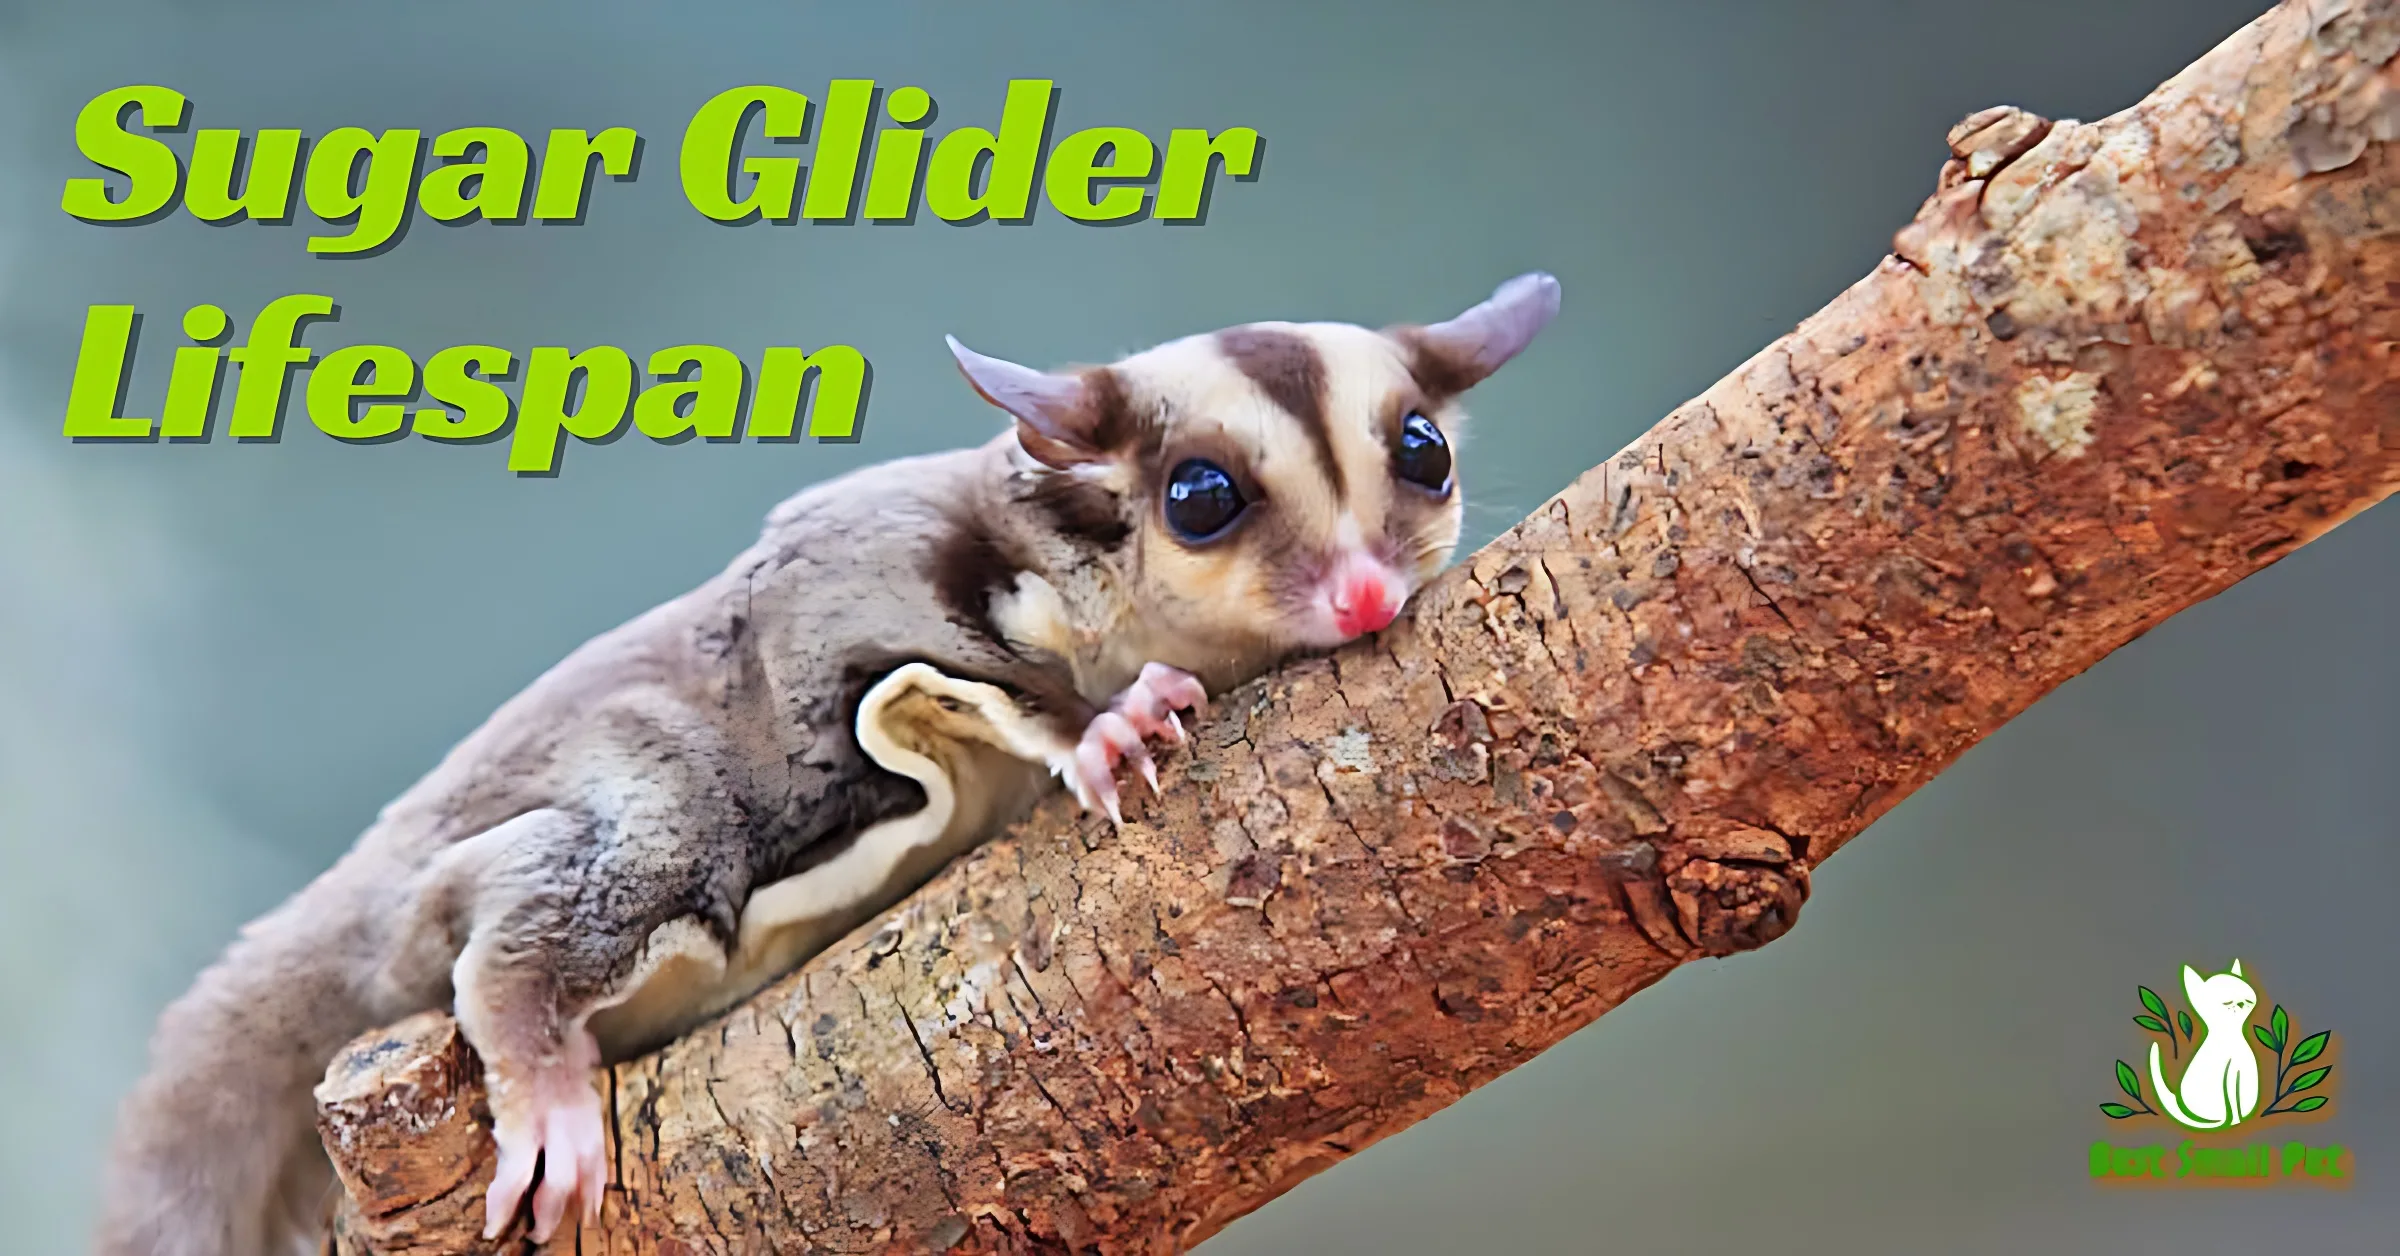 Sugar Glider Lifespan